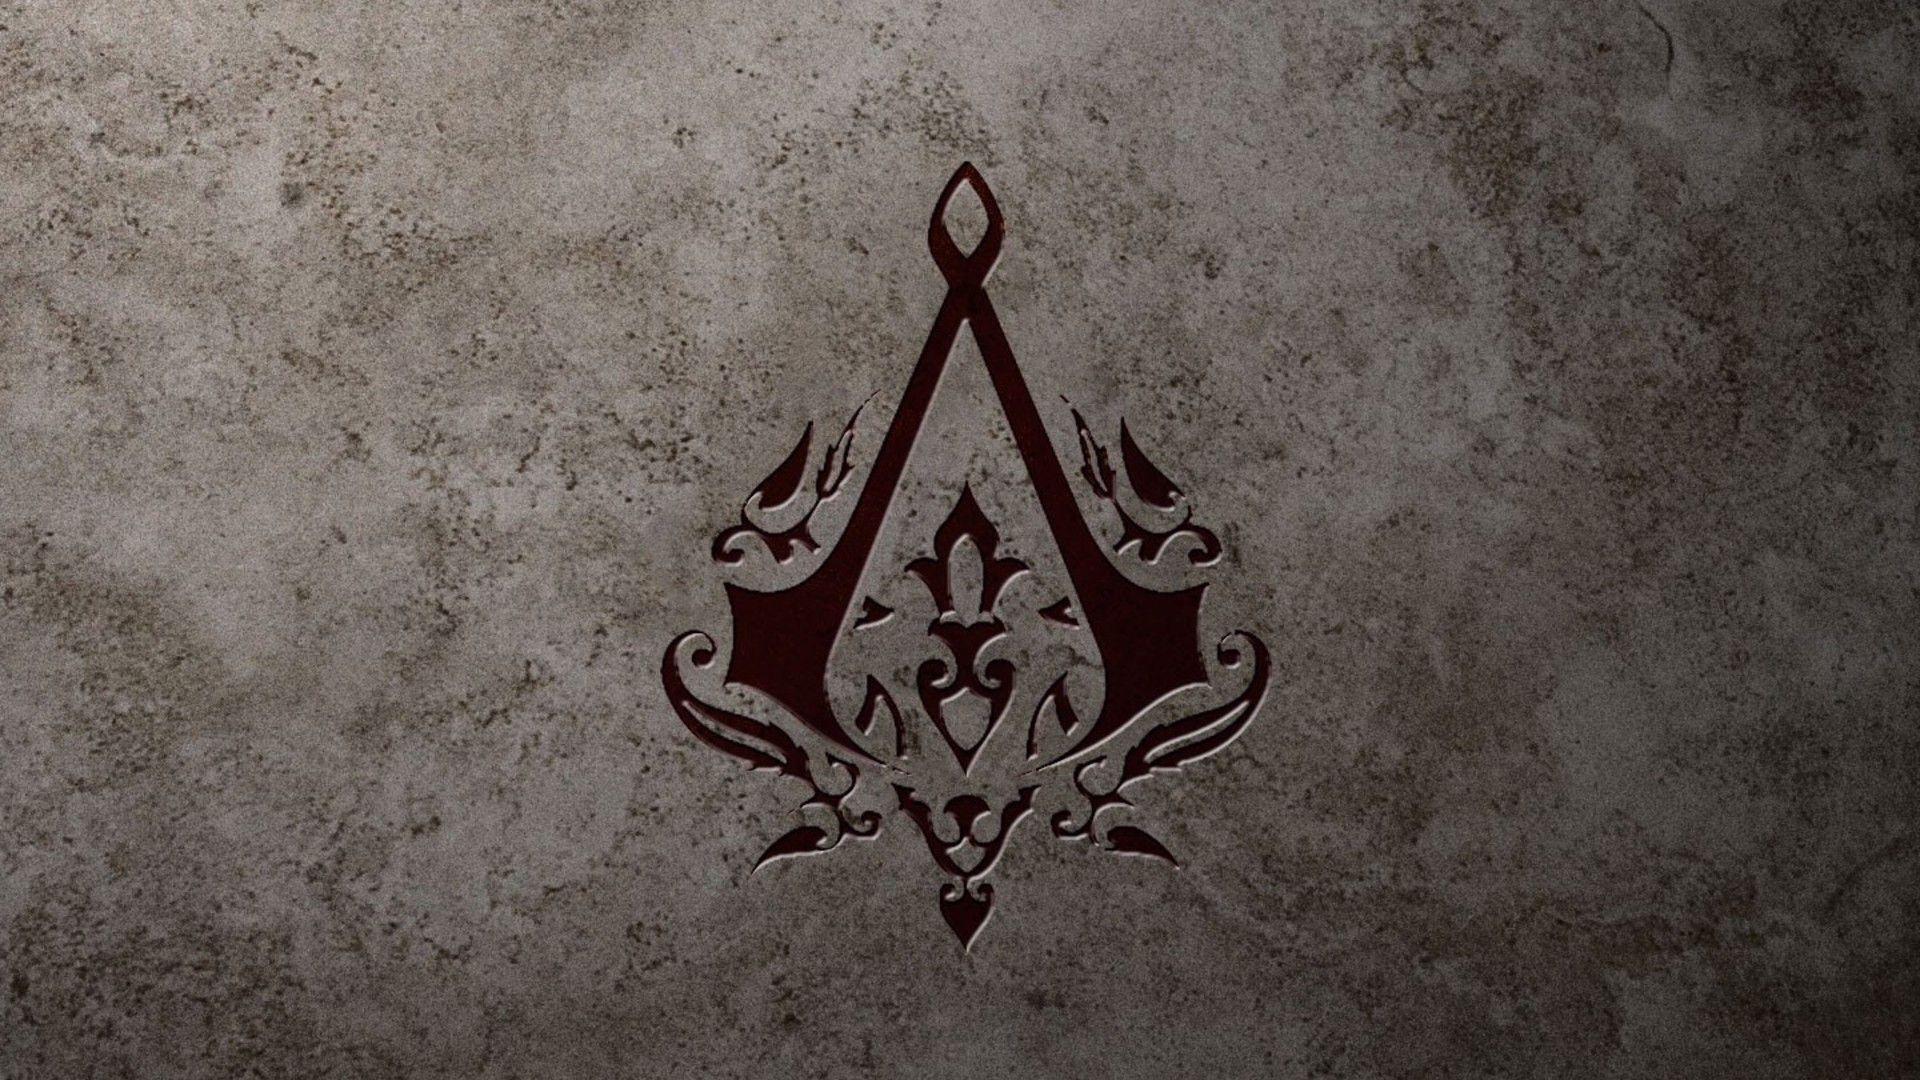 Assassins Creed Logos 1080p Wallpaper